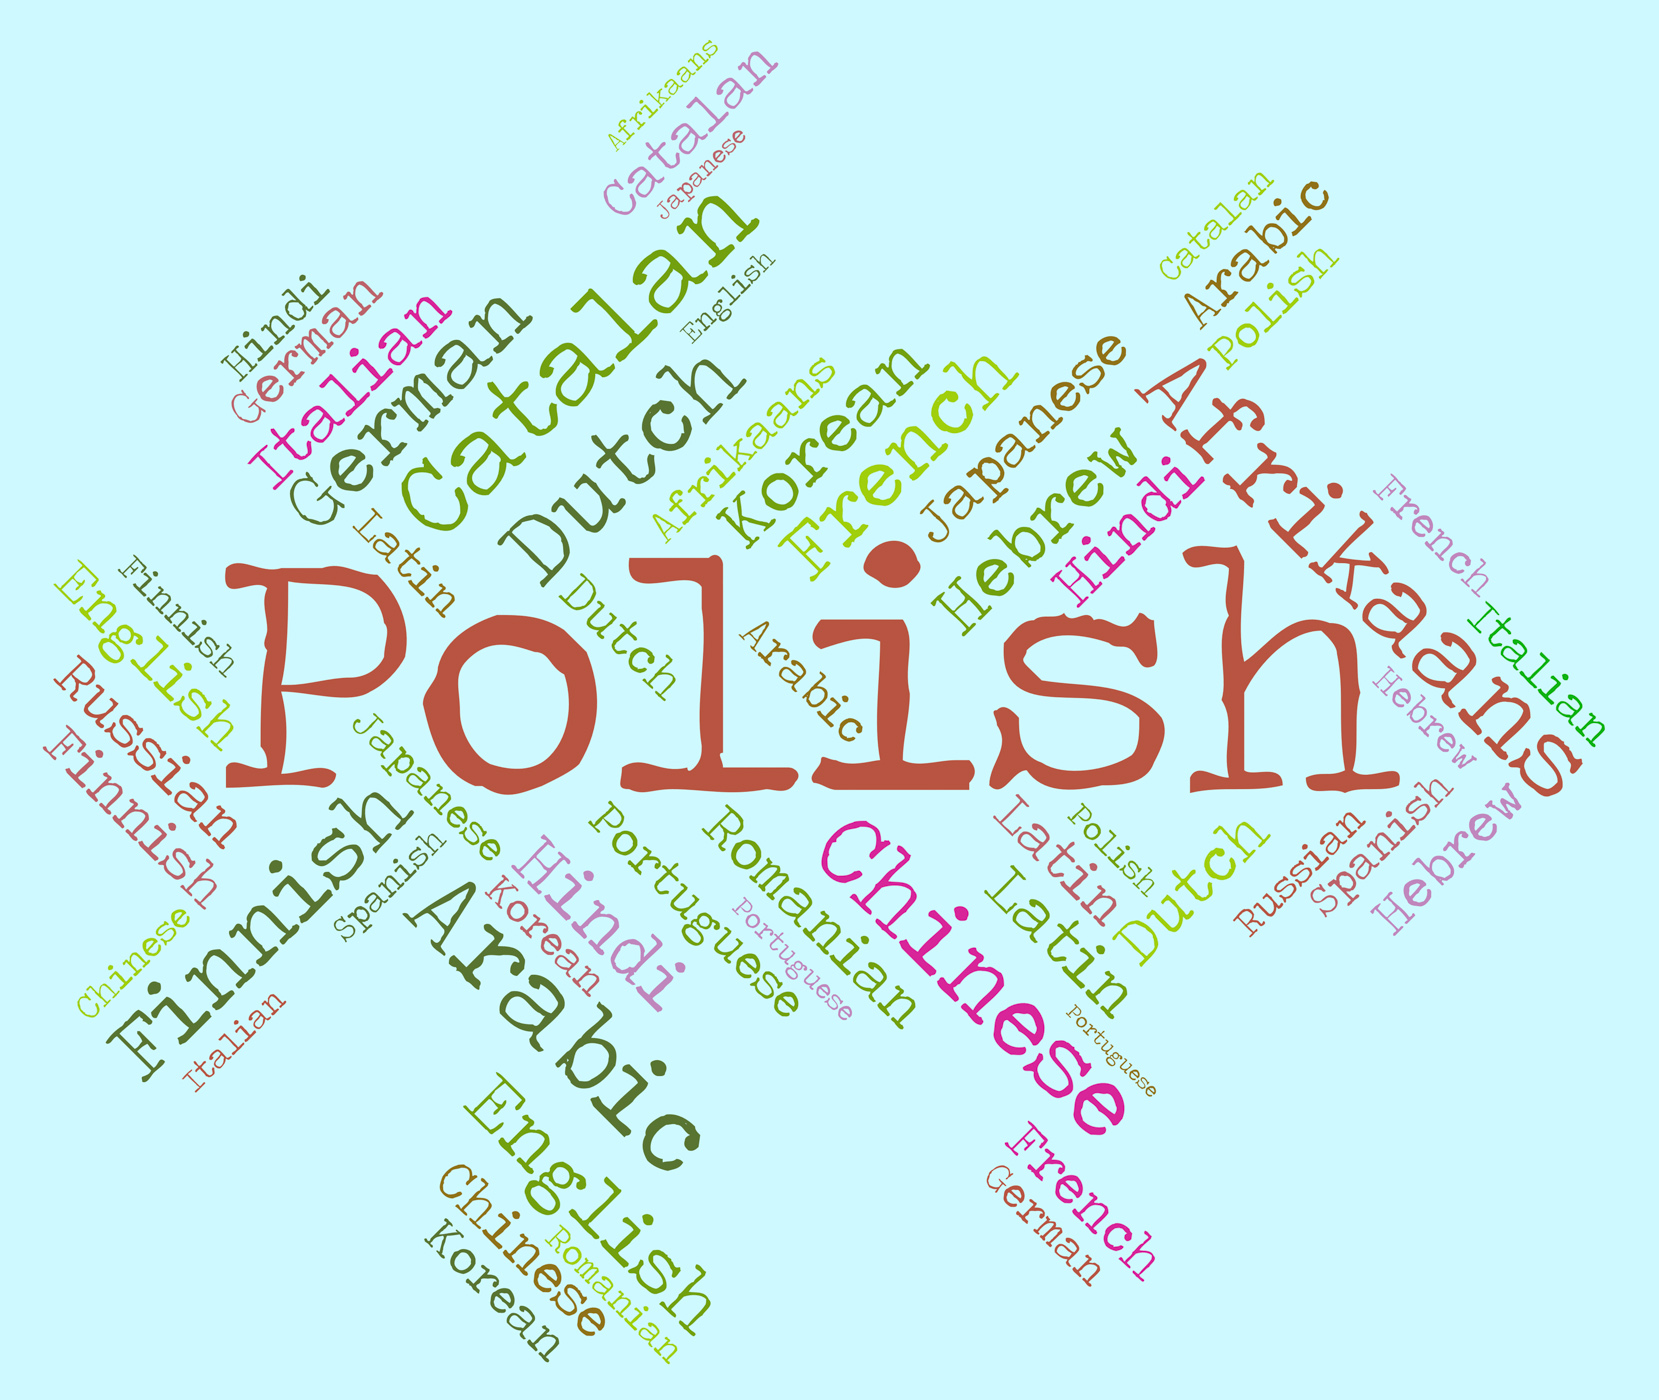 Polish language shows vocabulary word and lingo photo